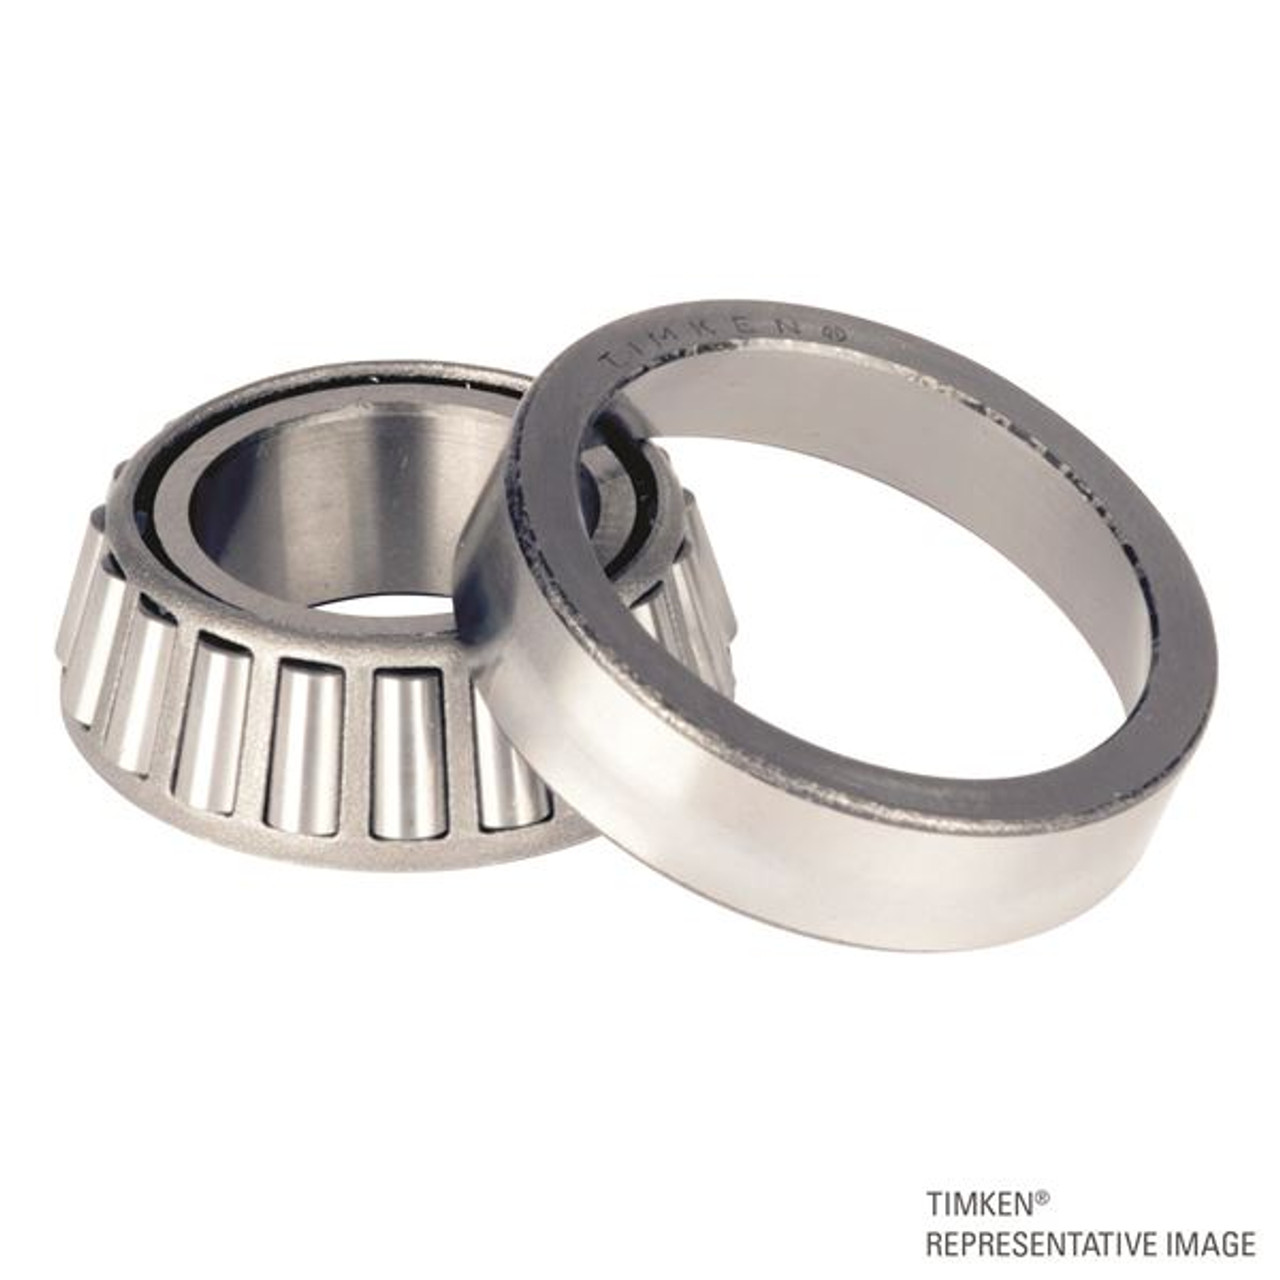 Timken® Single Row Cup & Cone Assembly - Precision Class  L713049-90010